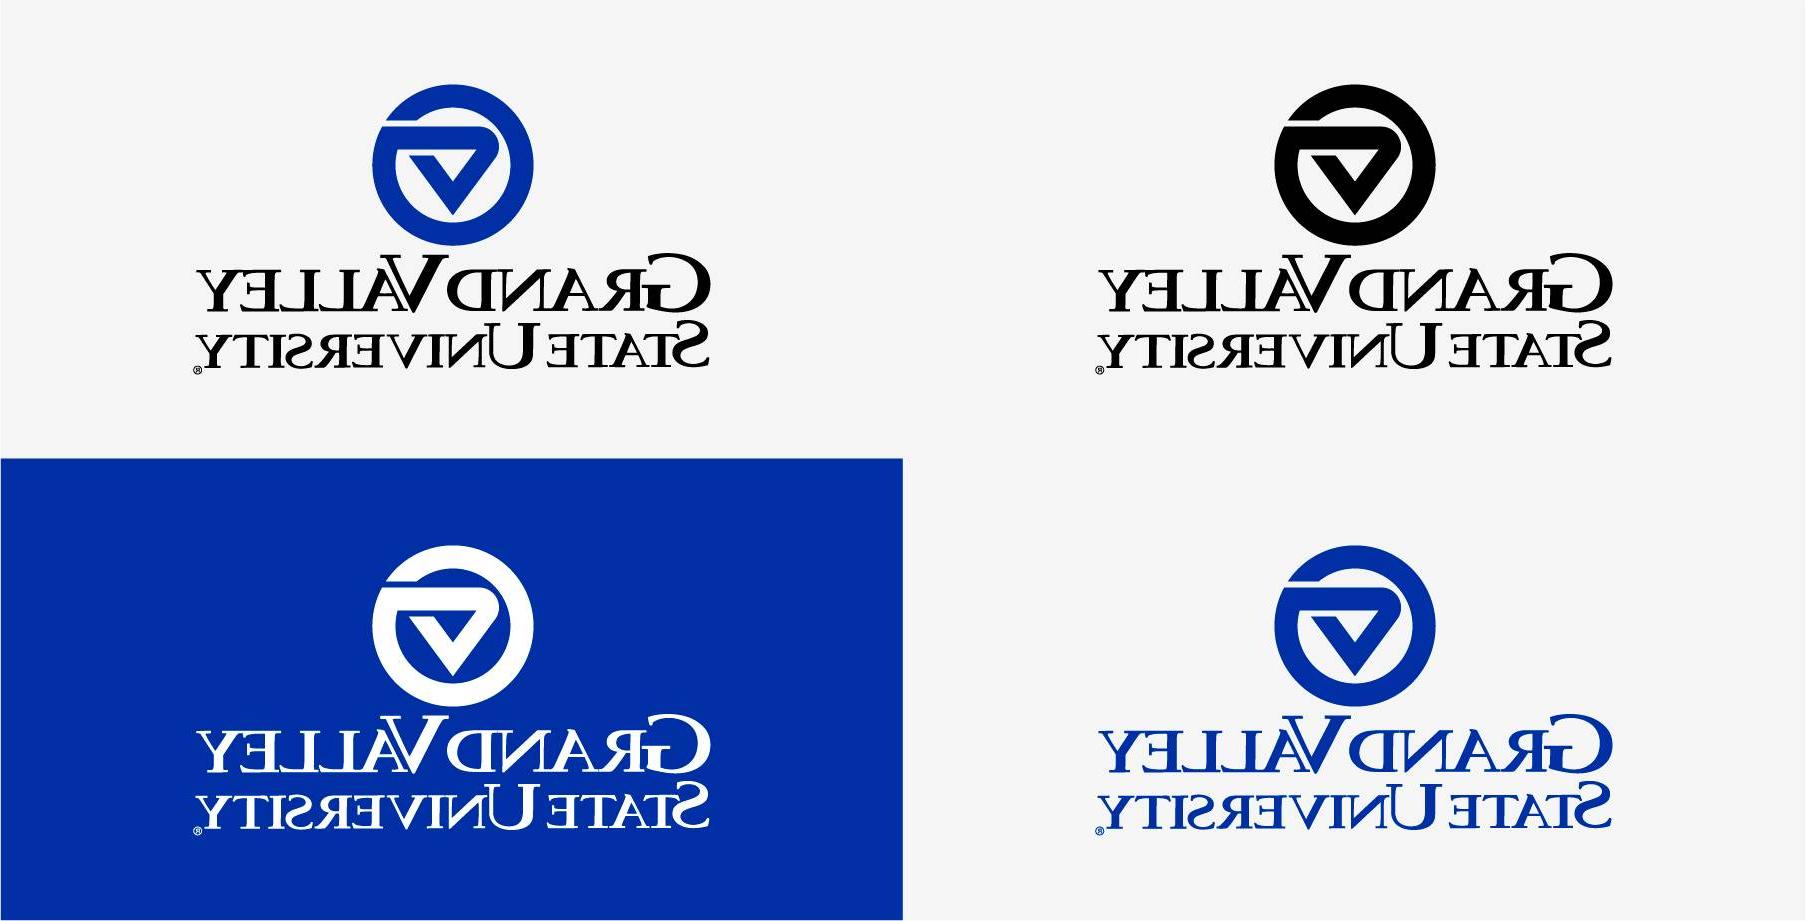 4 博天堂官方 logos: one 黑色的, one 蓝色的, one 黑色的 和 蓝色的, one 白色.